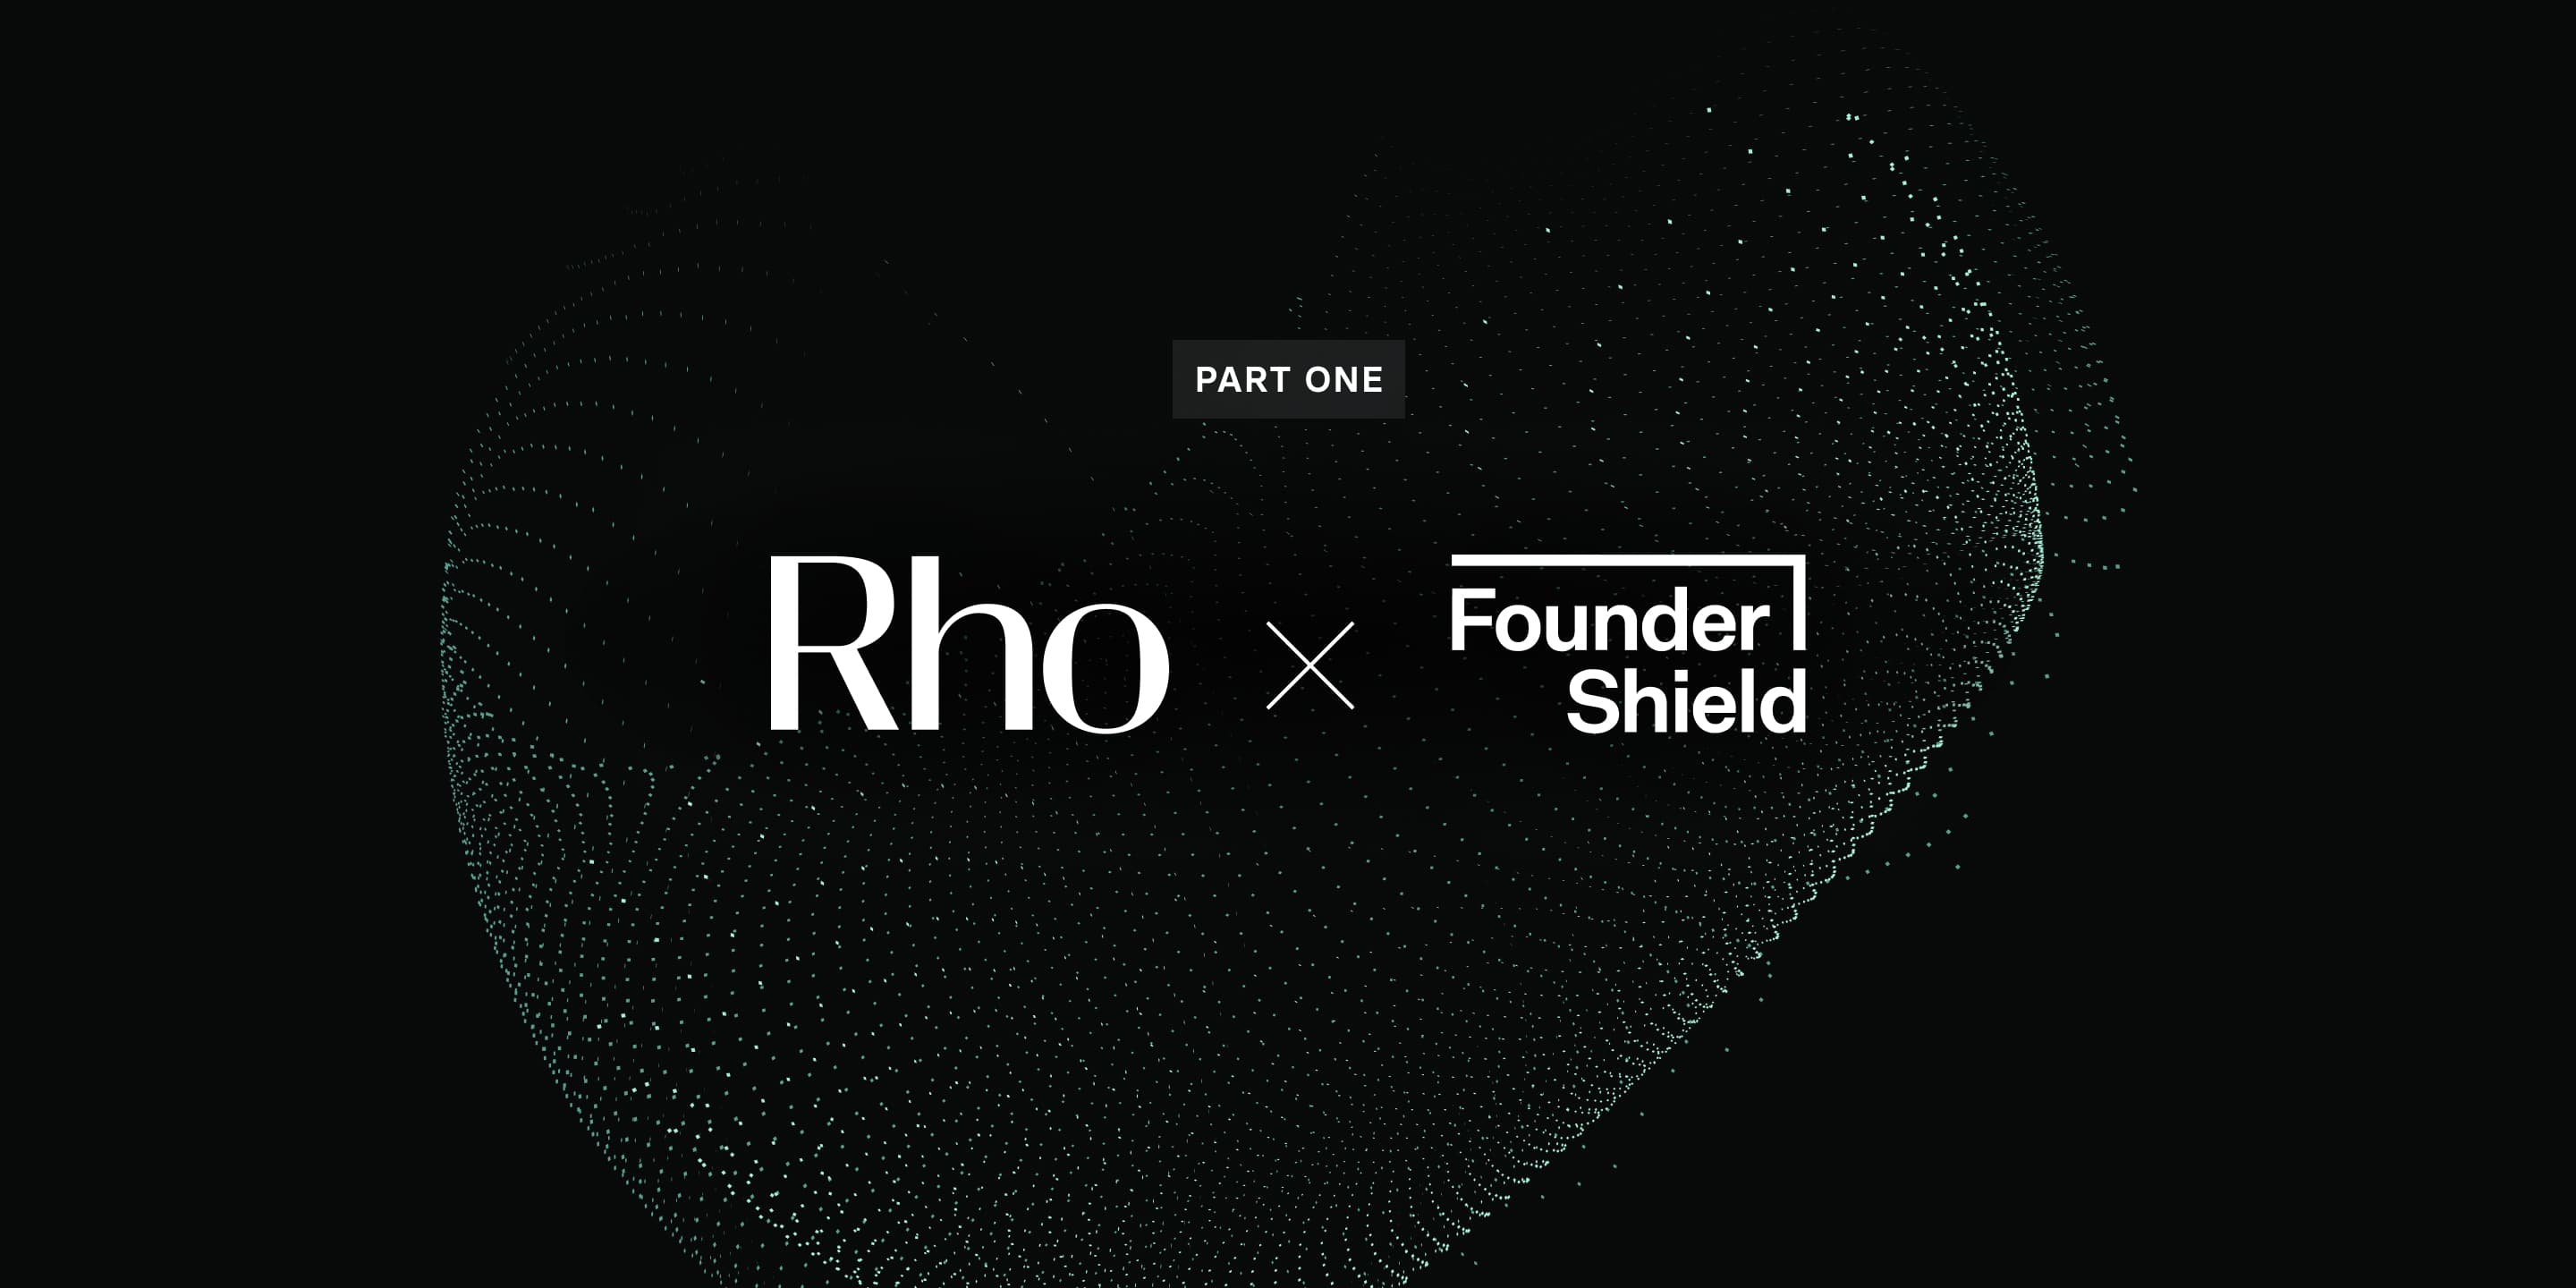 Founder Shield x Rho blog part 1 